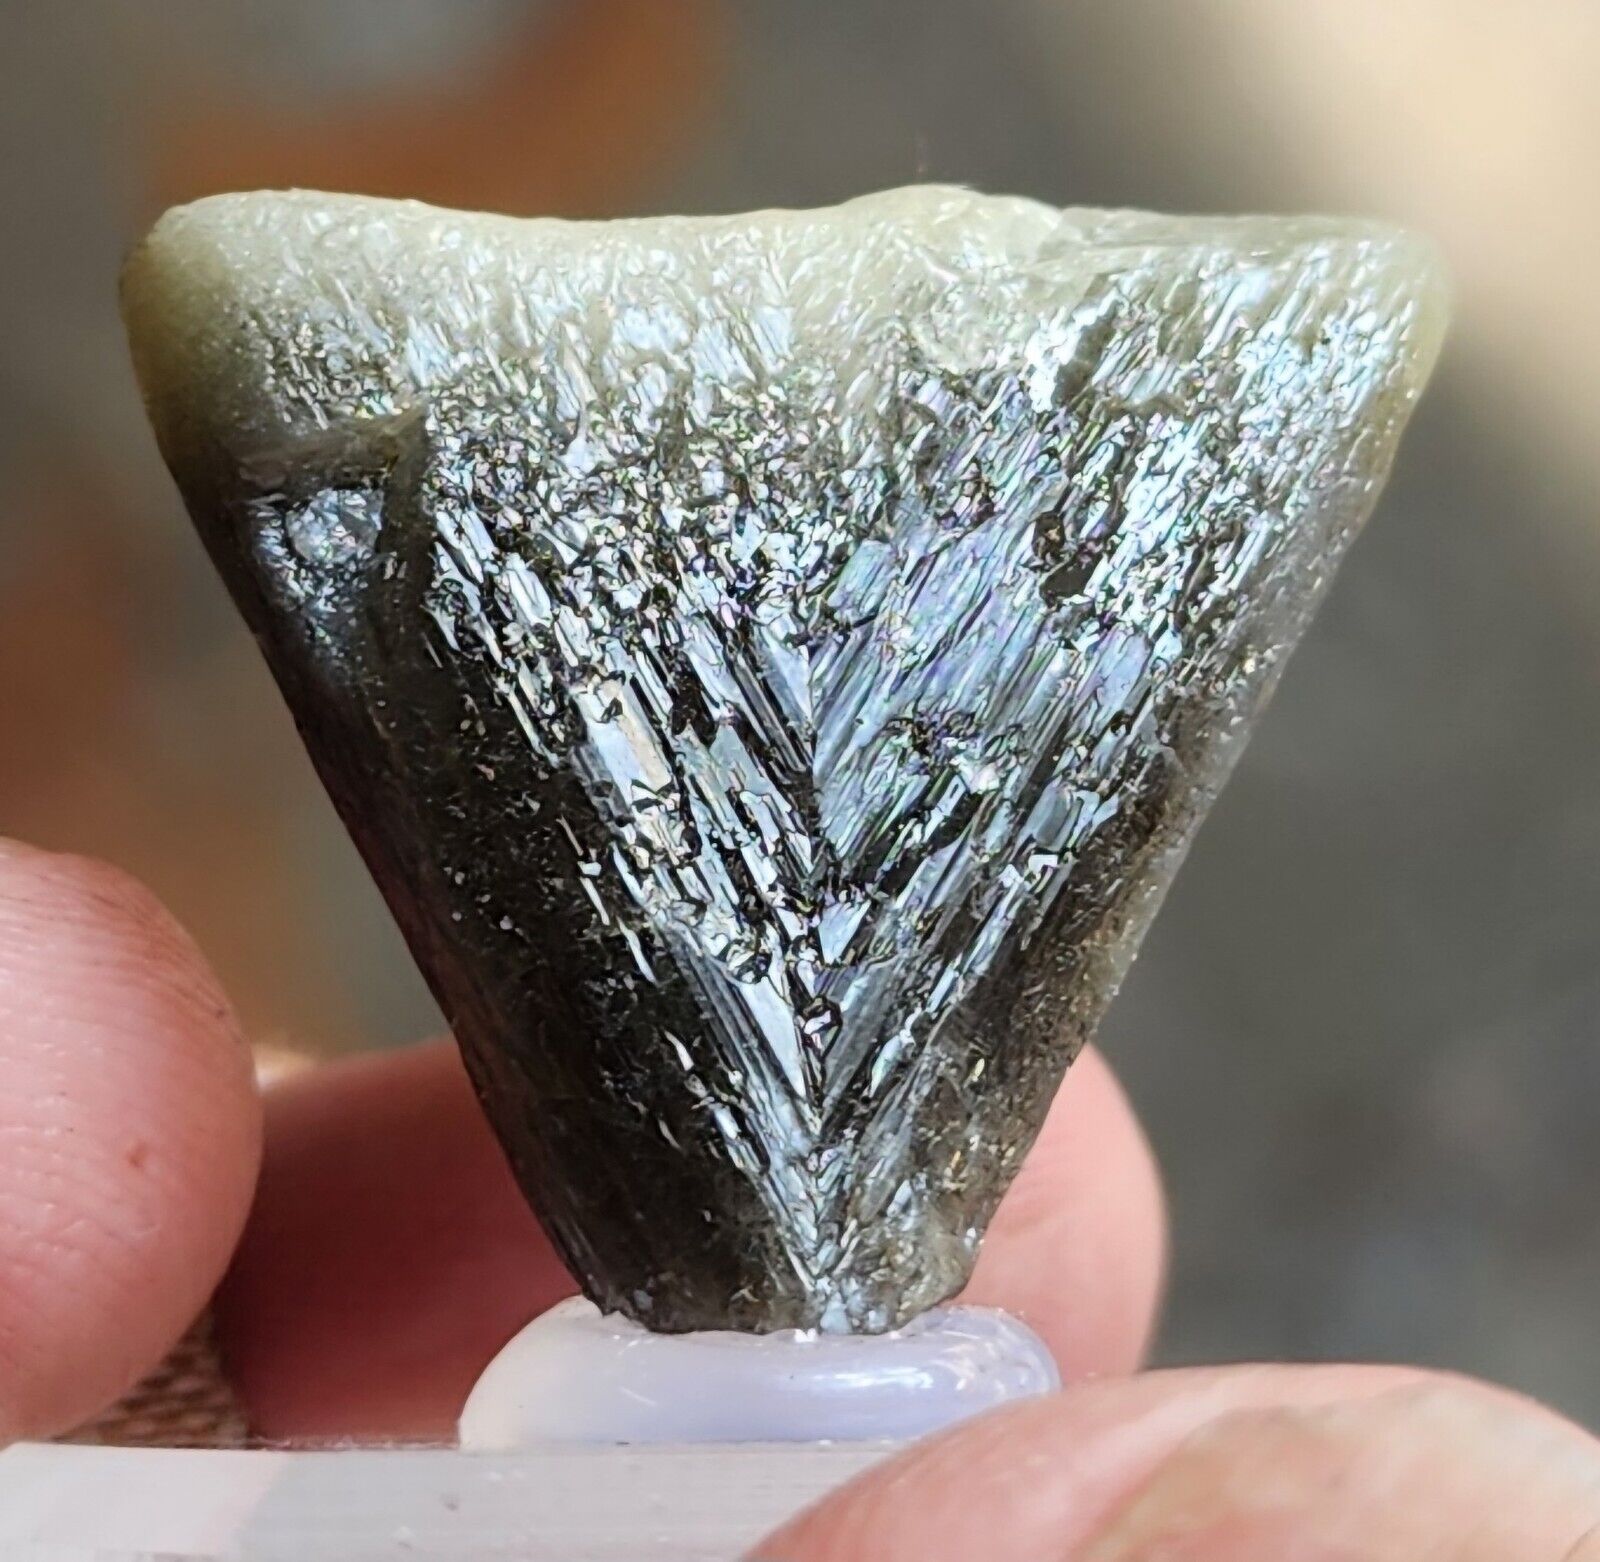 Rare Twinned Chrysoberyl Crystal - Santa Teresa, Espirito Santo, Brazil 2.6 Cm +